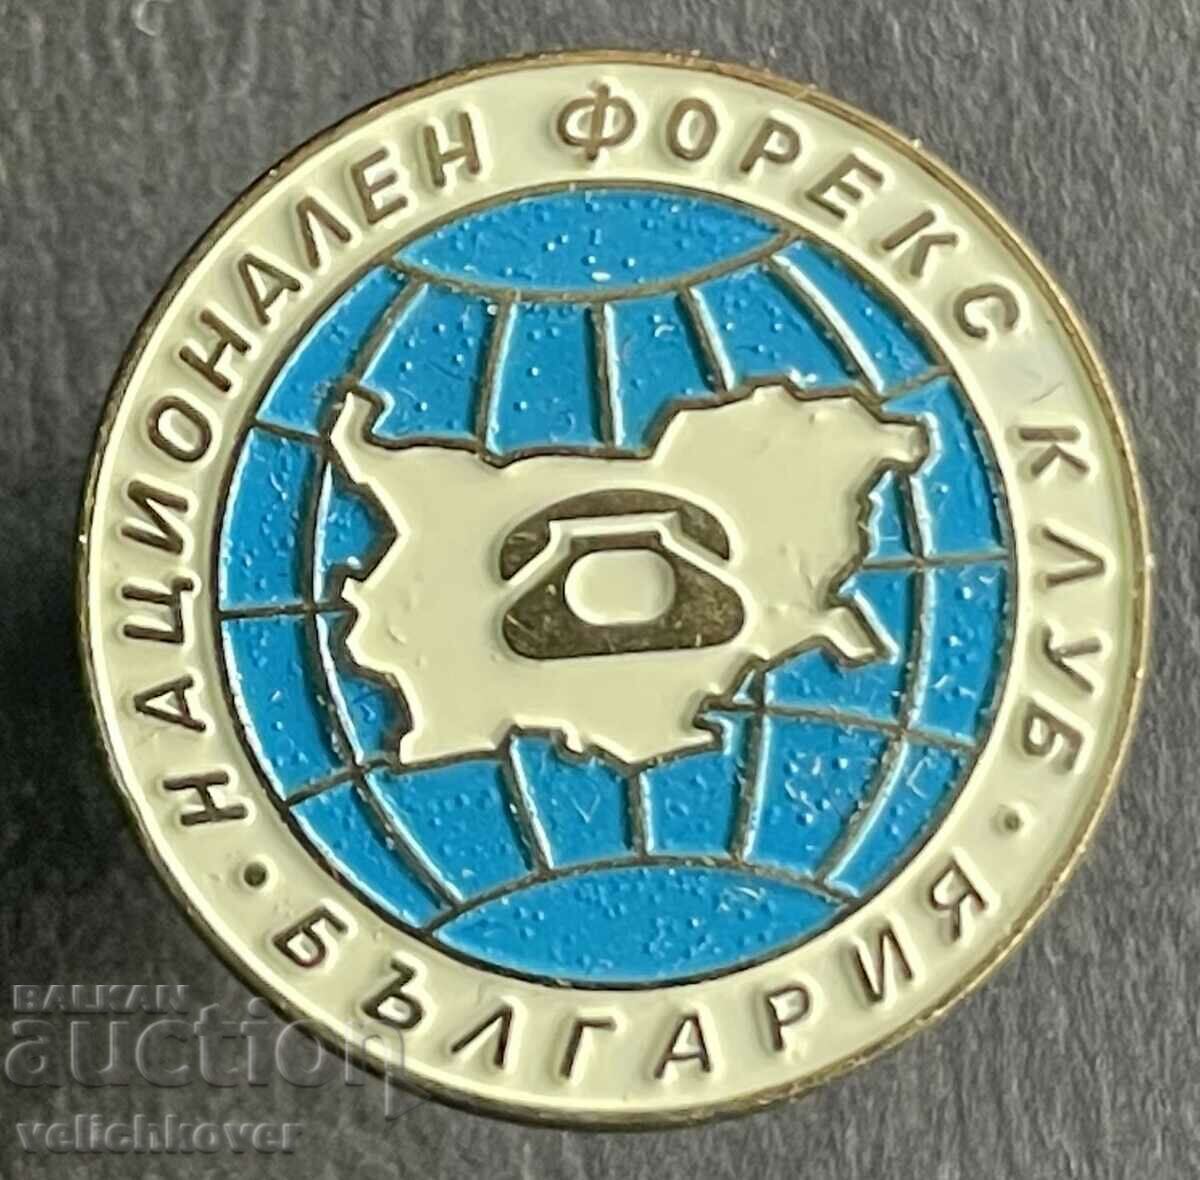 35900 България знак Национален форекс клуб България